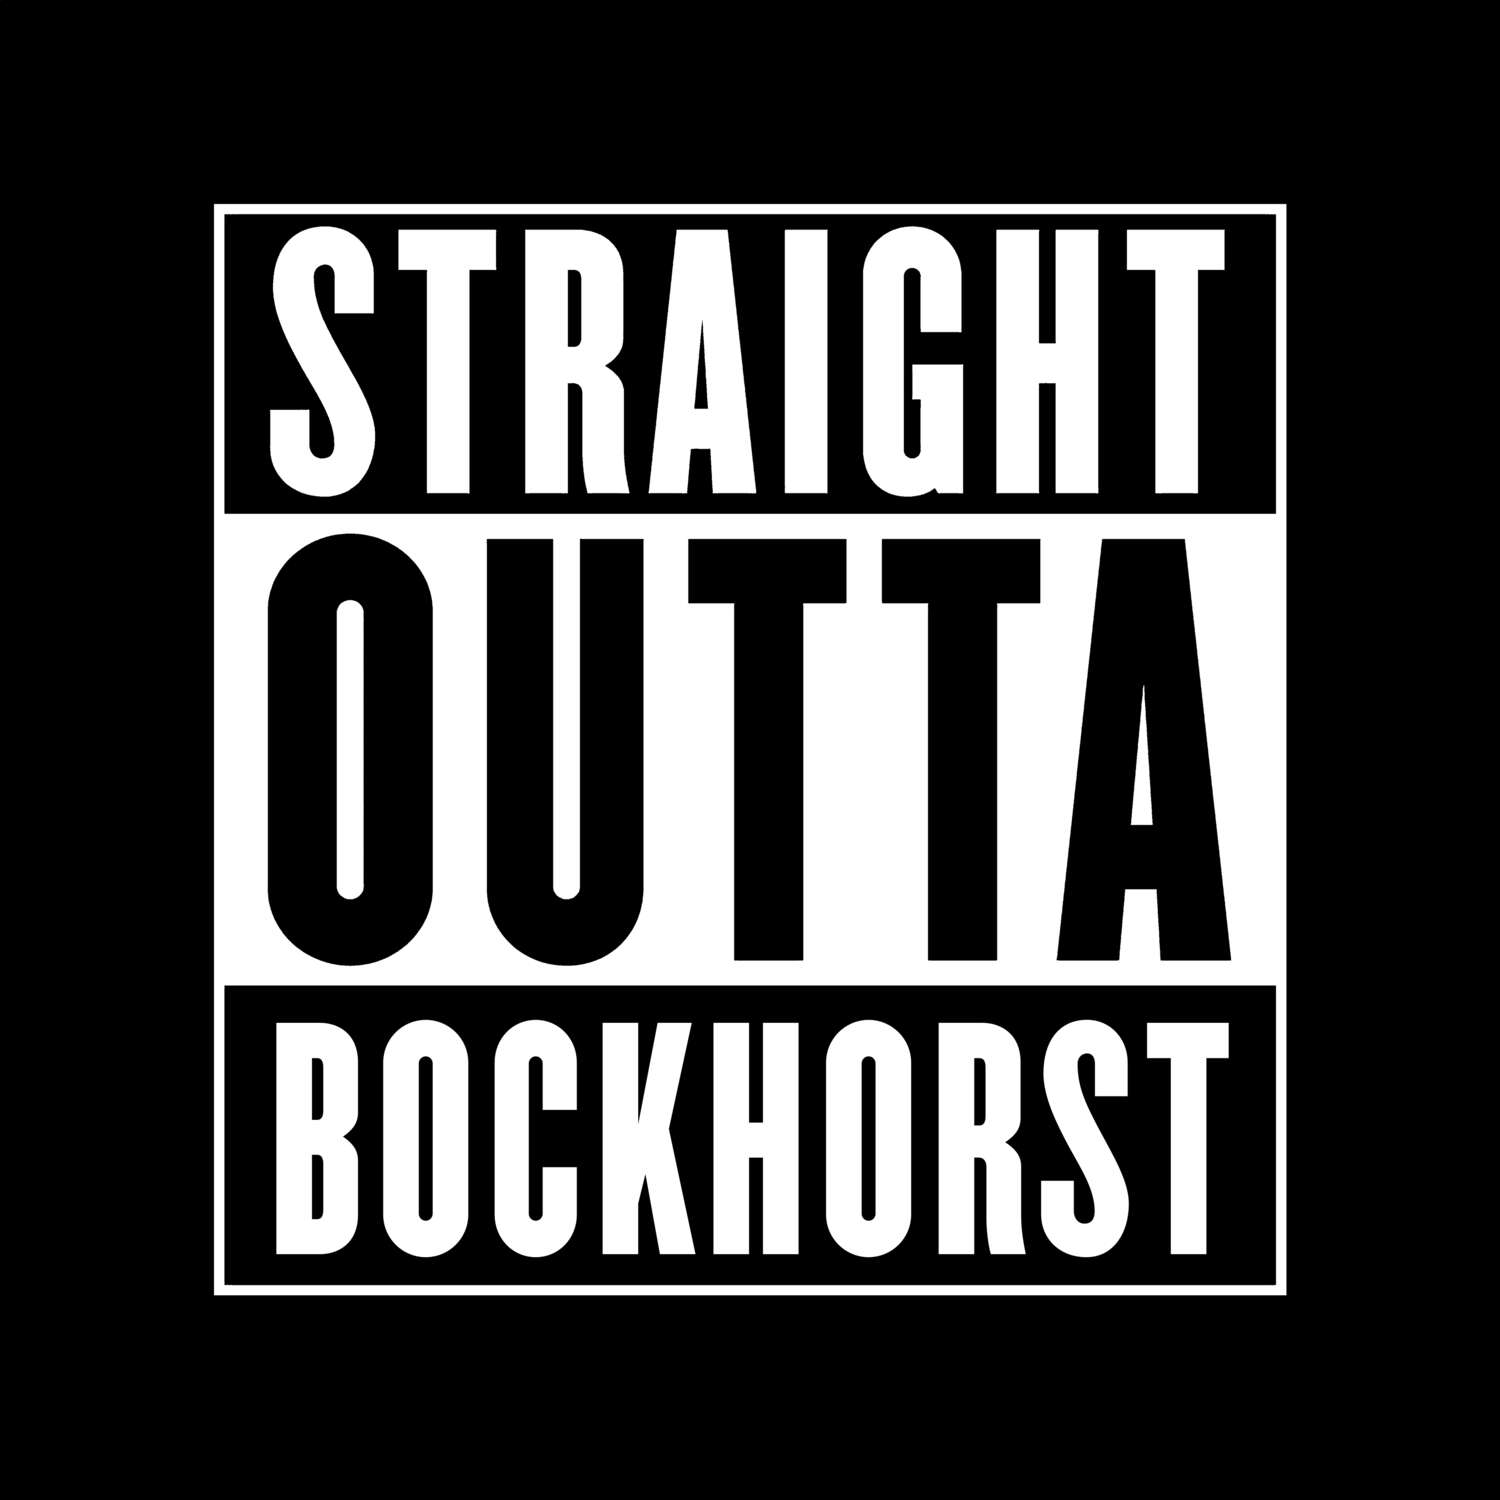 Bockhorst T-Shirt »Straight Outta«